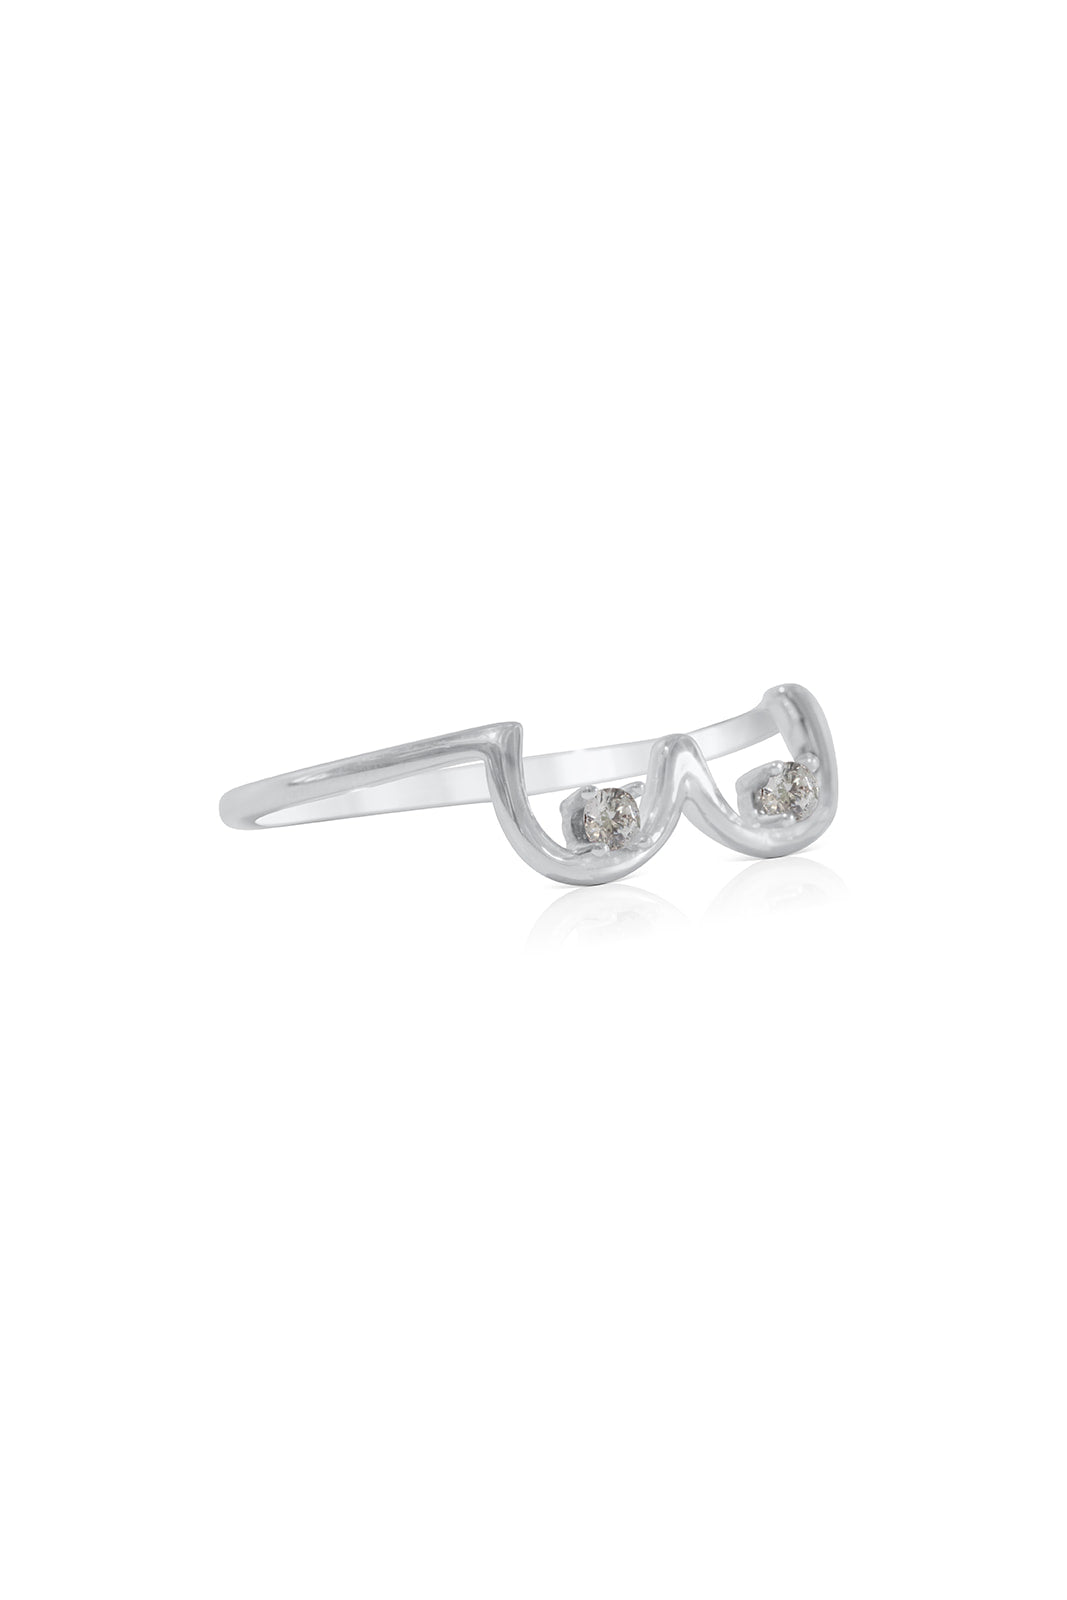 Boobie Birthstone Ring - Silver